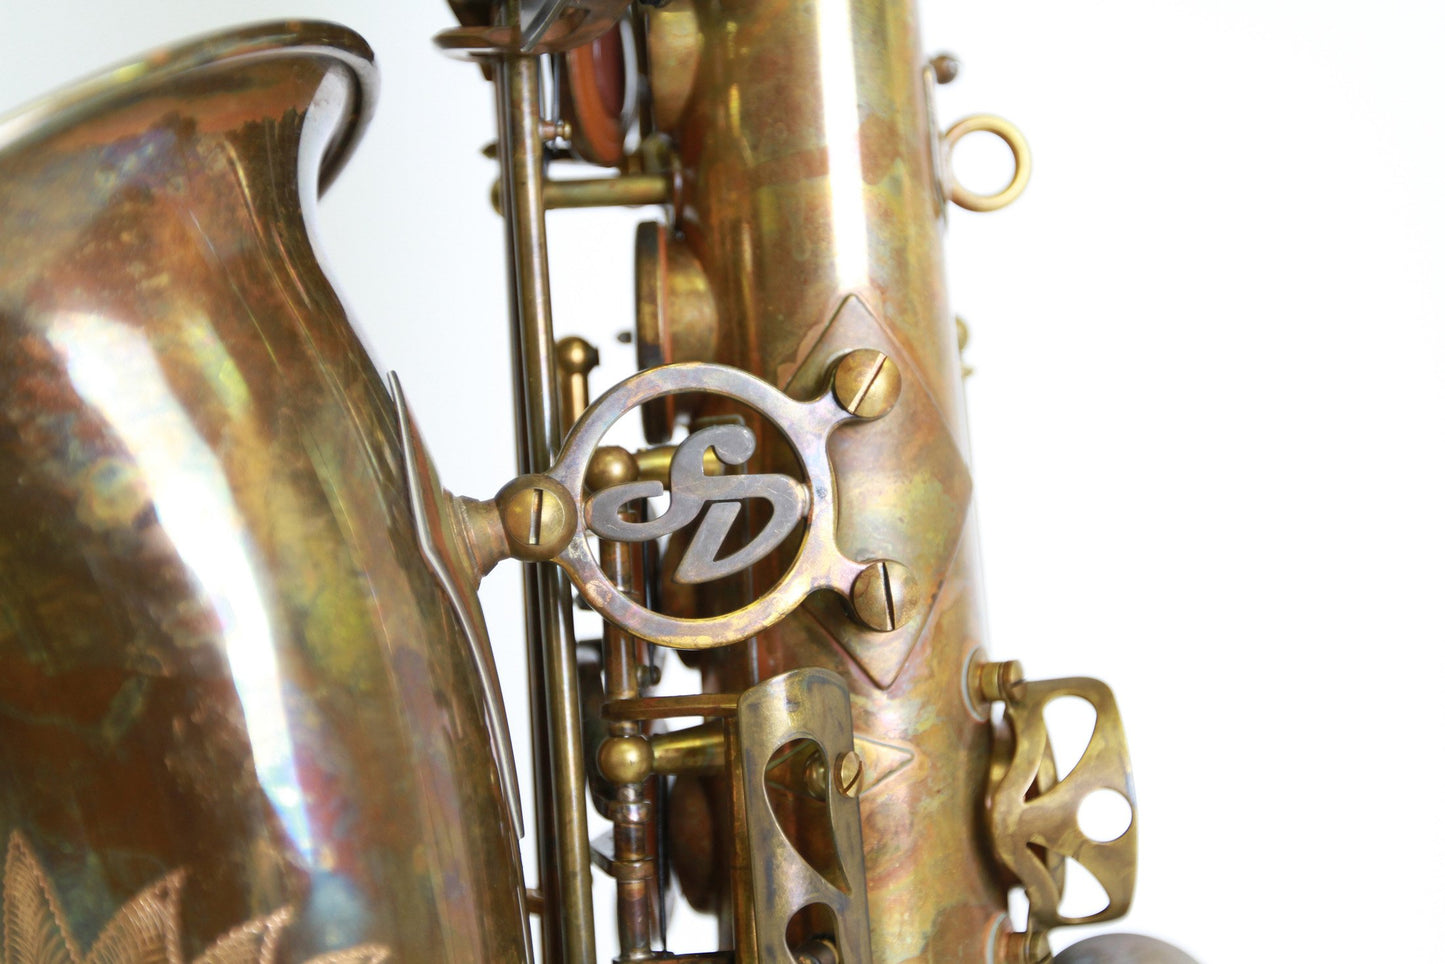 Sax Dakota SDA-XR-82 Alto Saxophone